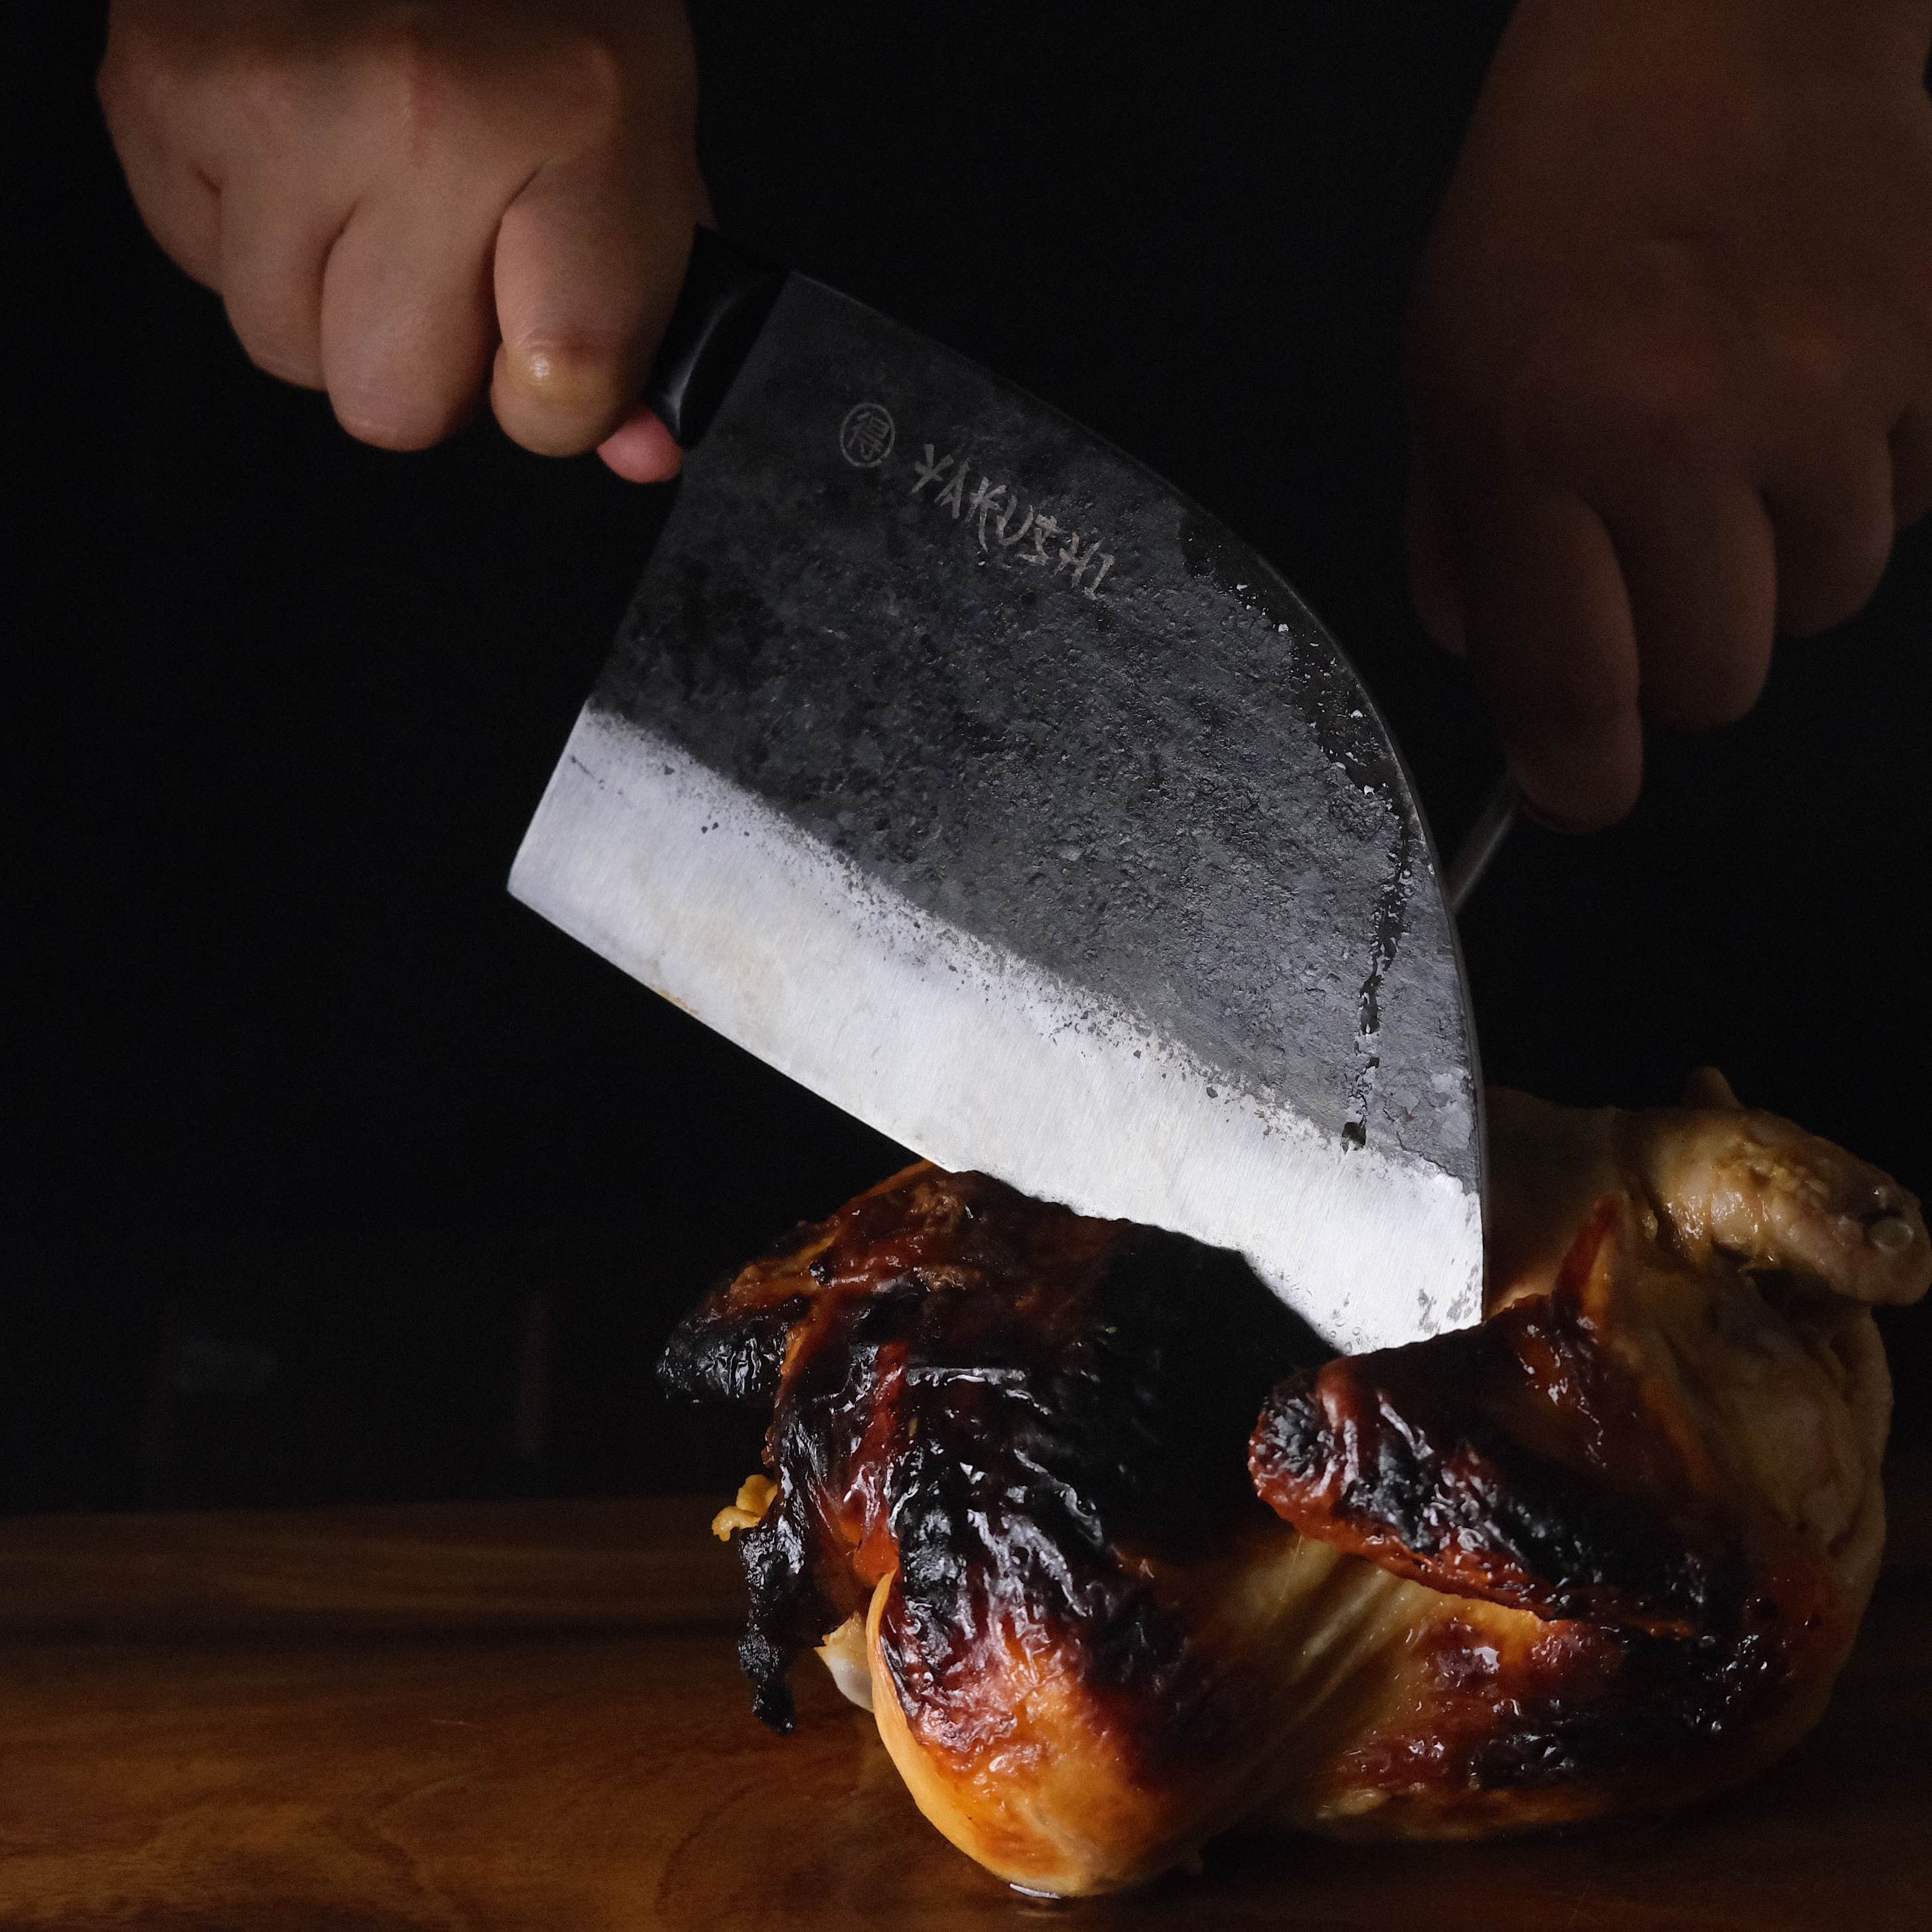 Handmade Butcher Knife